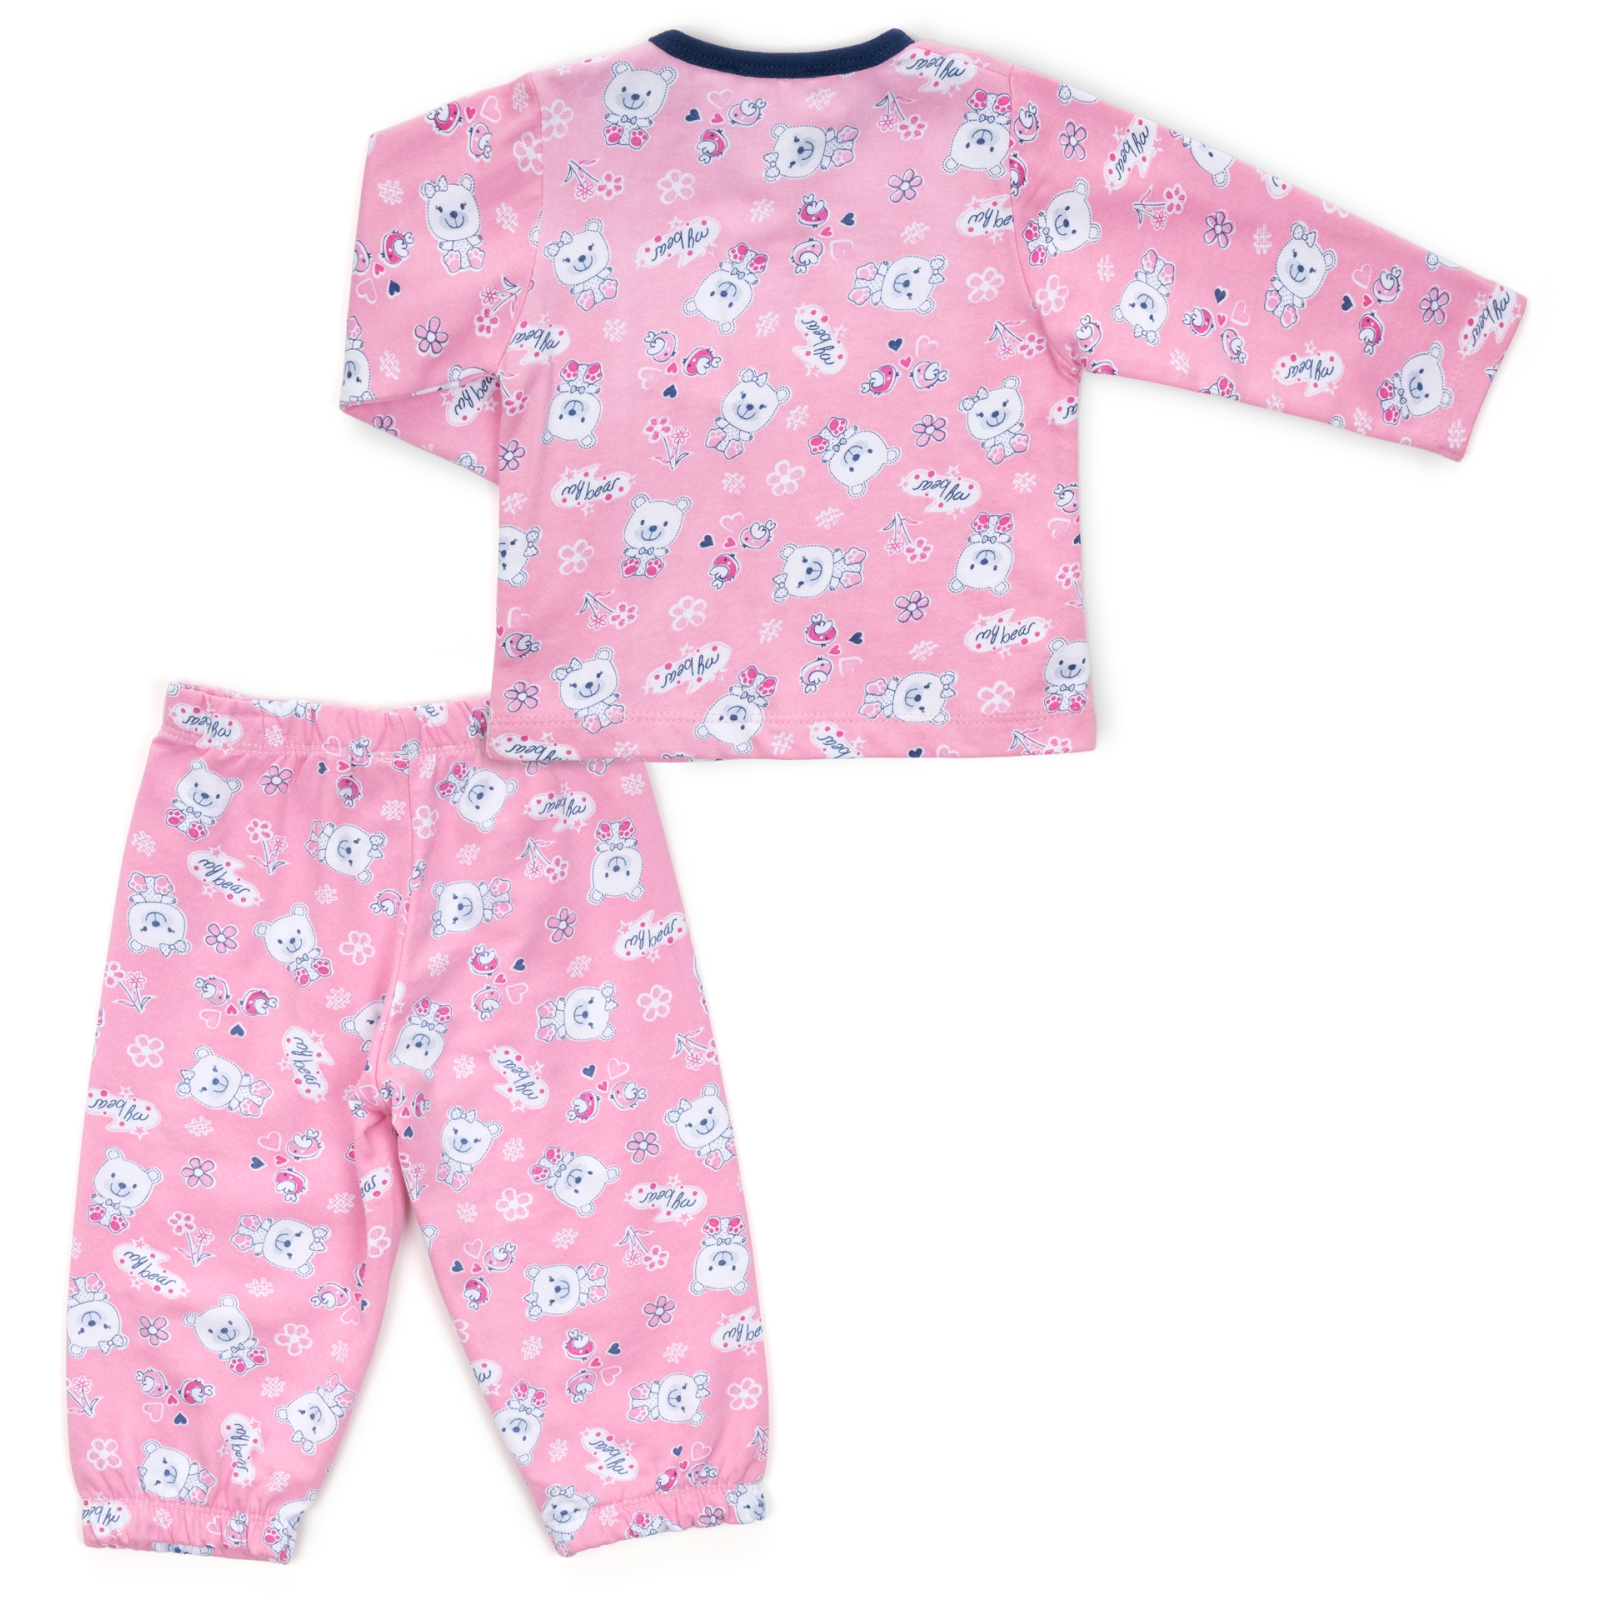 Пижама Breeze с мишками (8382-86G-pink) изображение 5